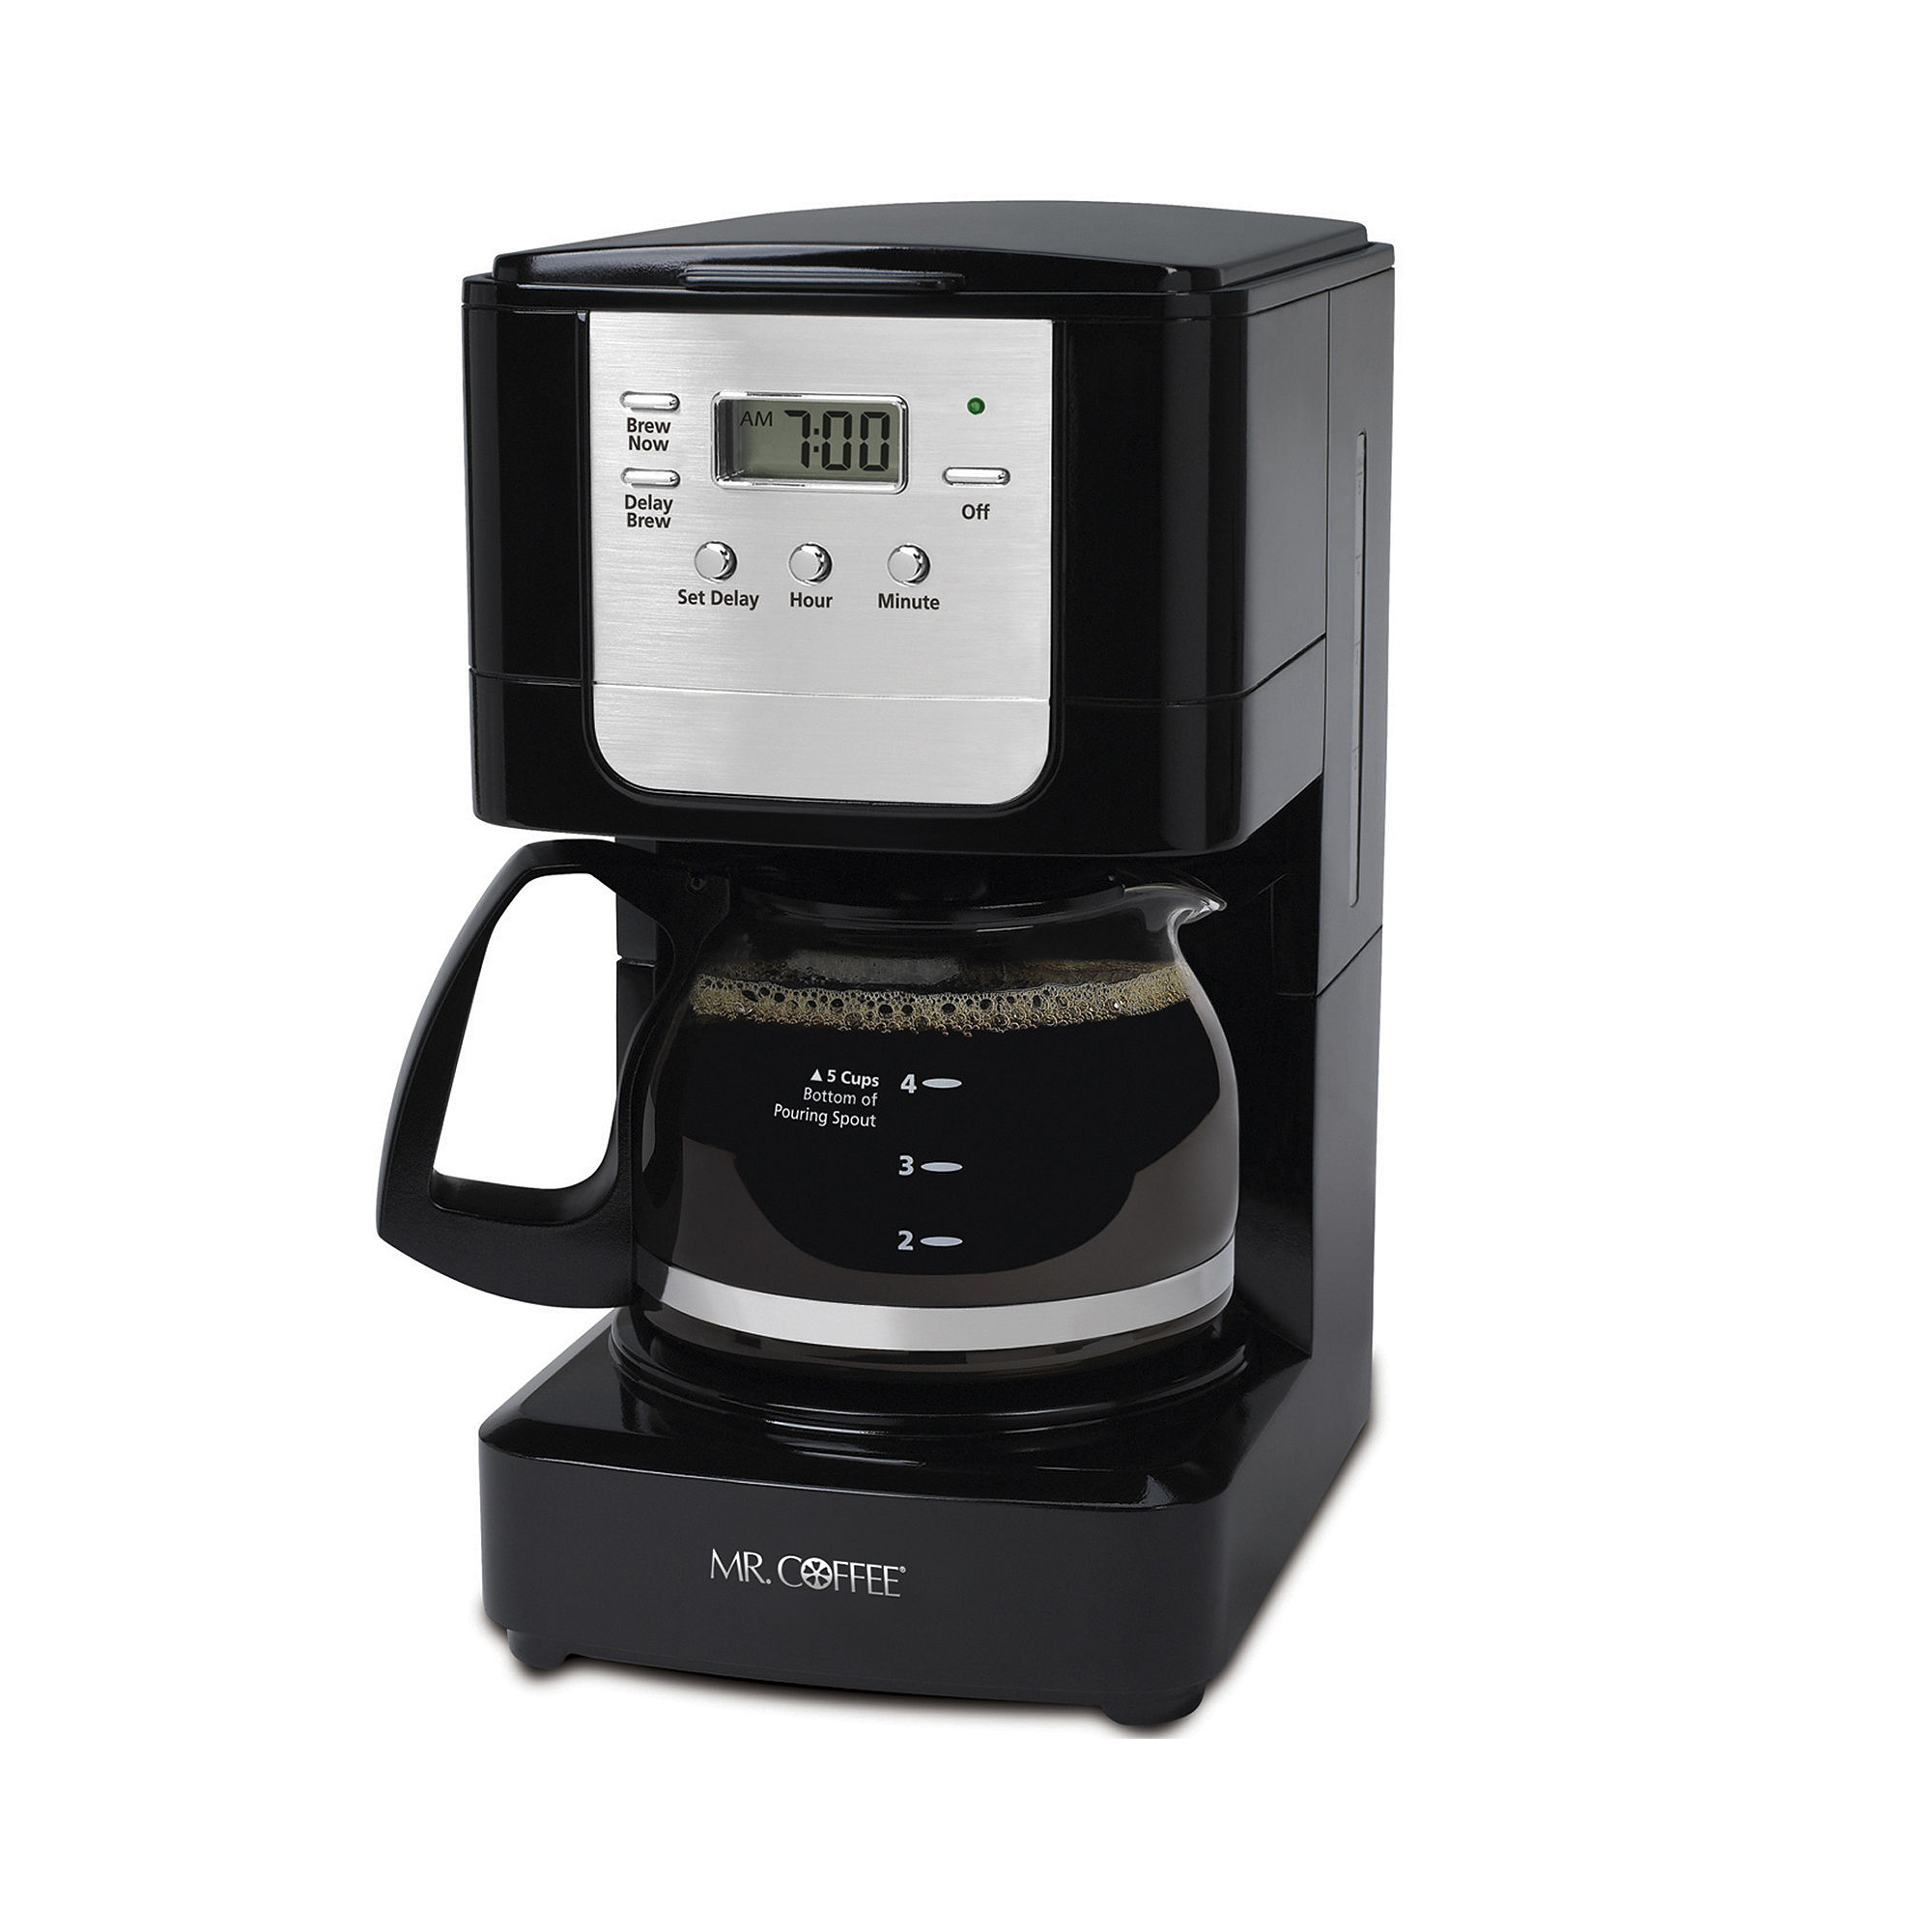 Mr. Coffee Advanced Brew 5-Cup Programmable Coffee Maker